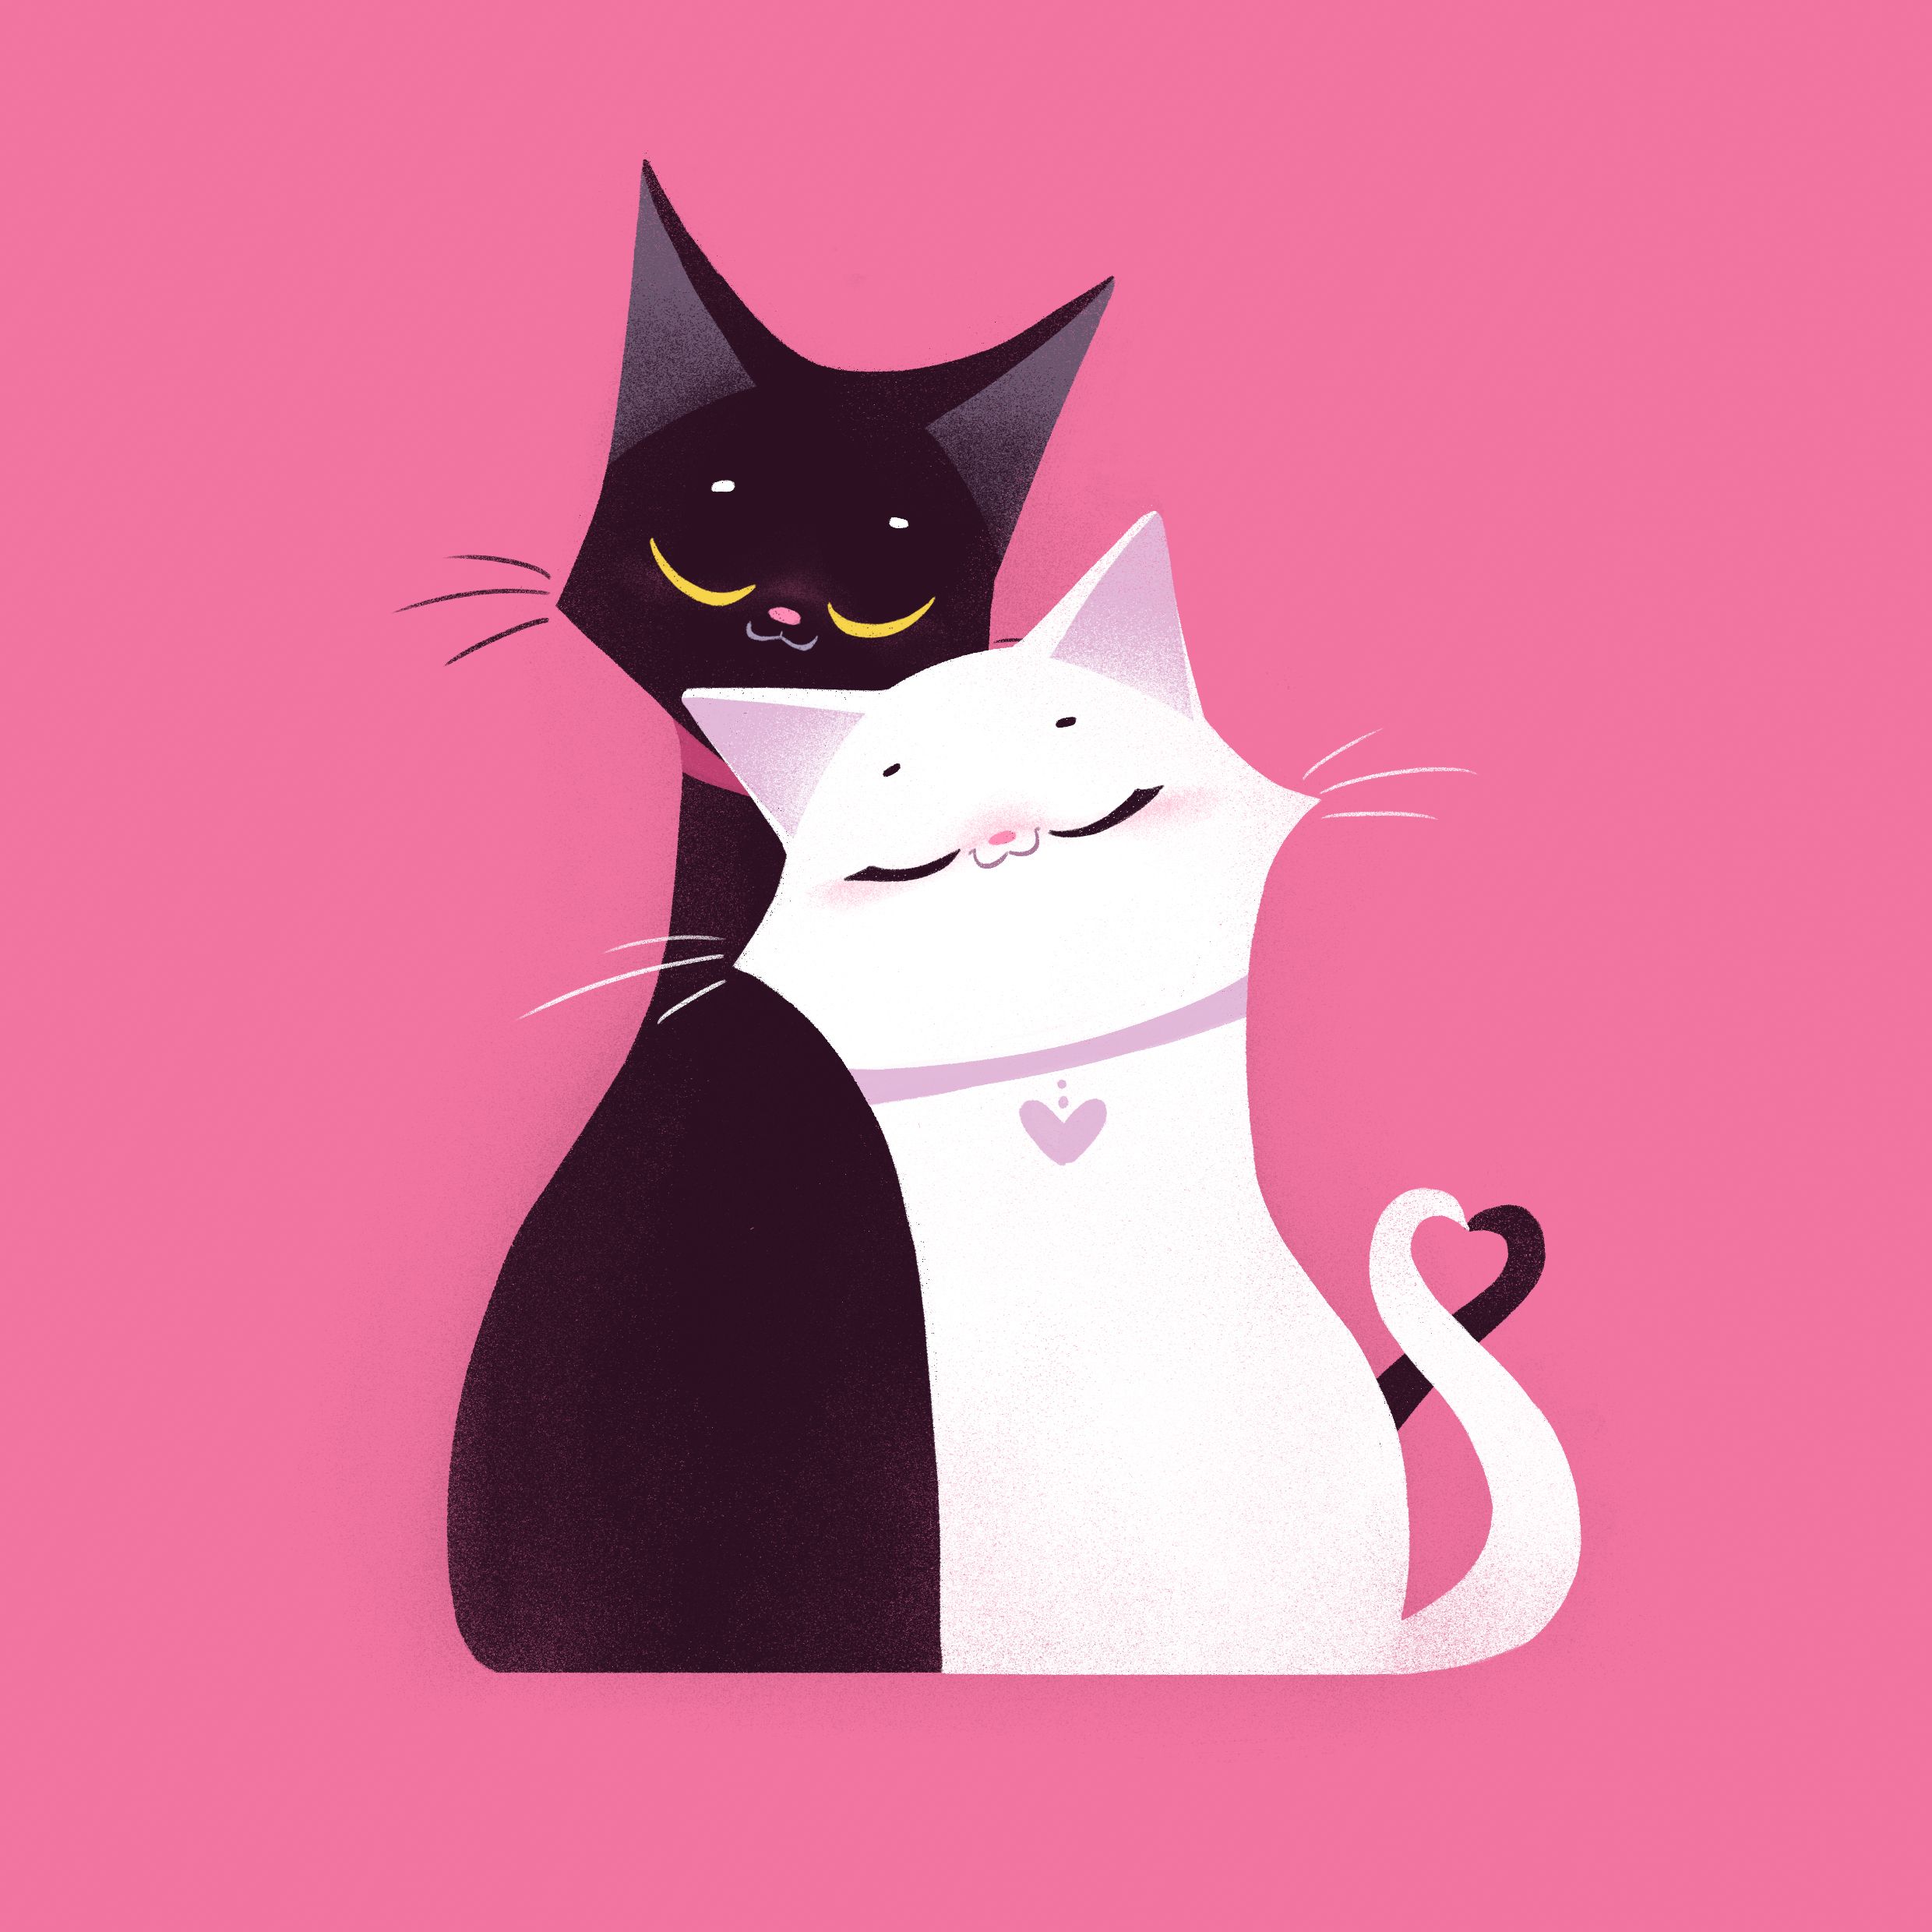 Cat Love on Behance Cat illustration, Cat love, Cats